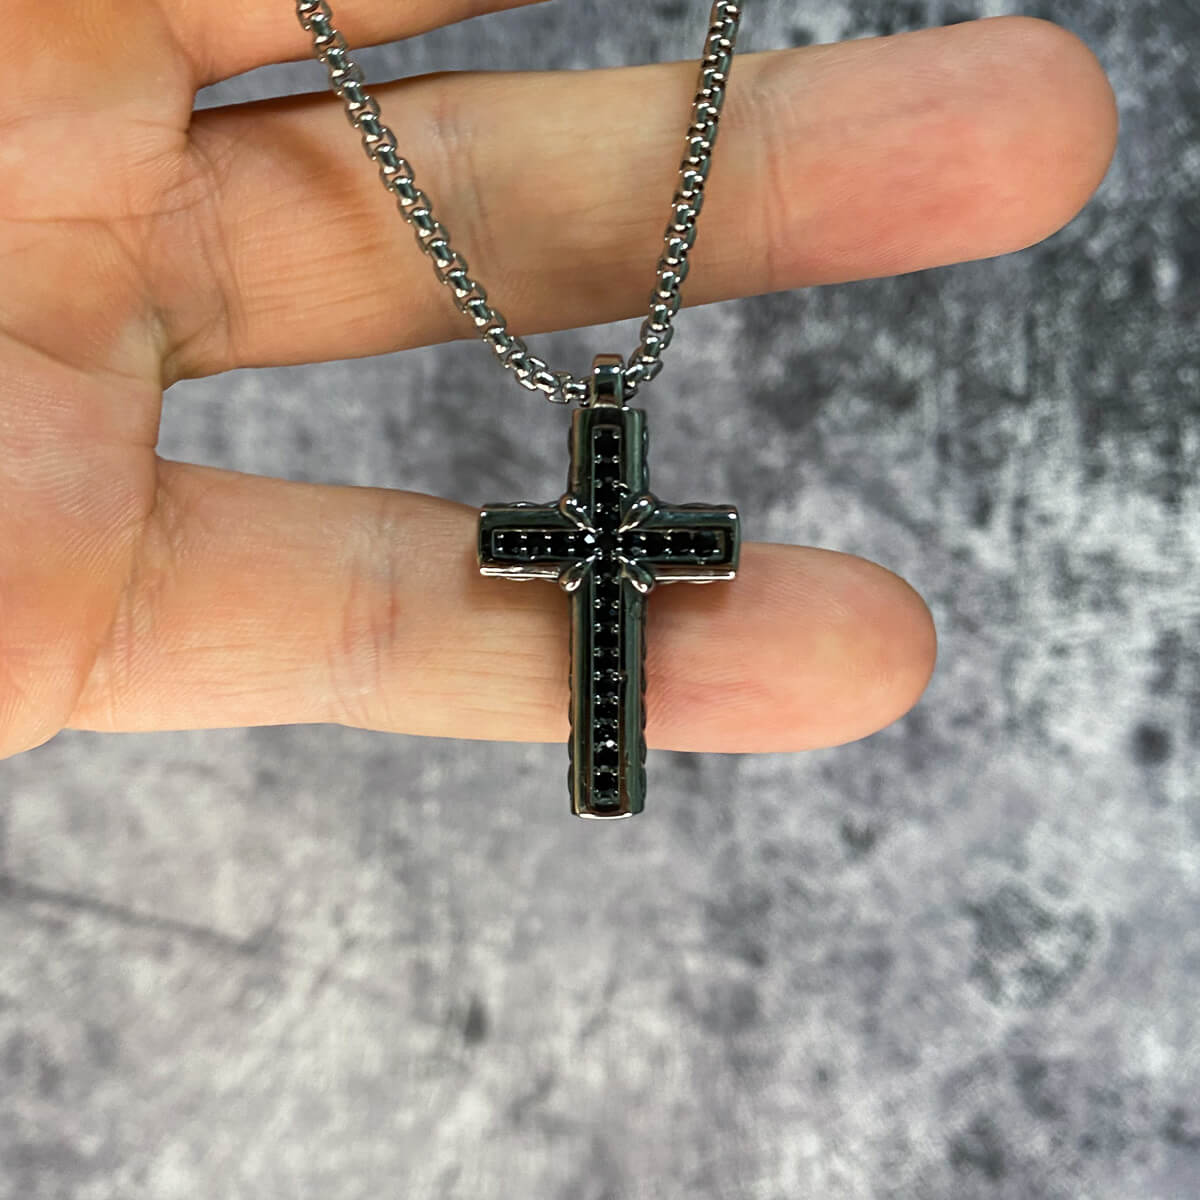 Stone cross pendant steel necklace 60cm